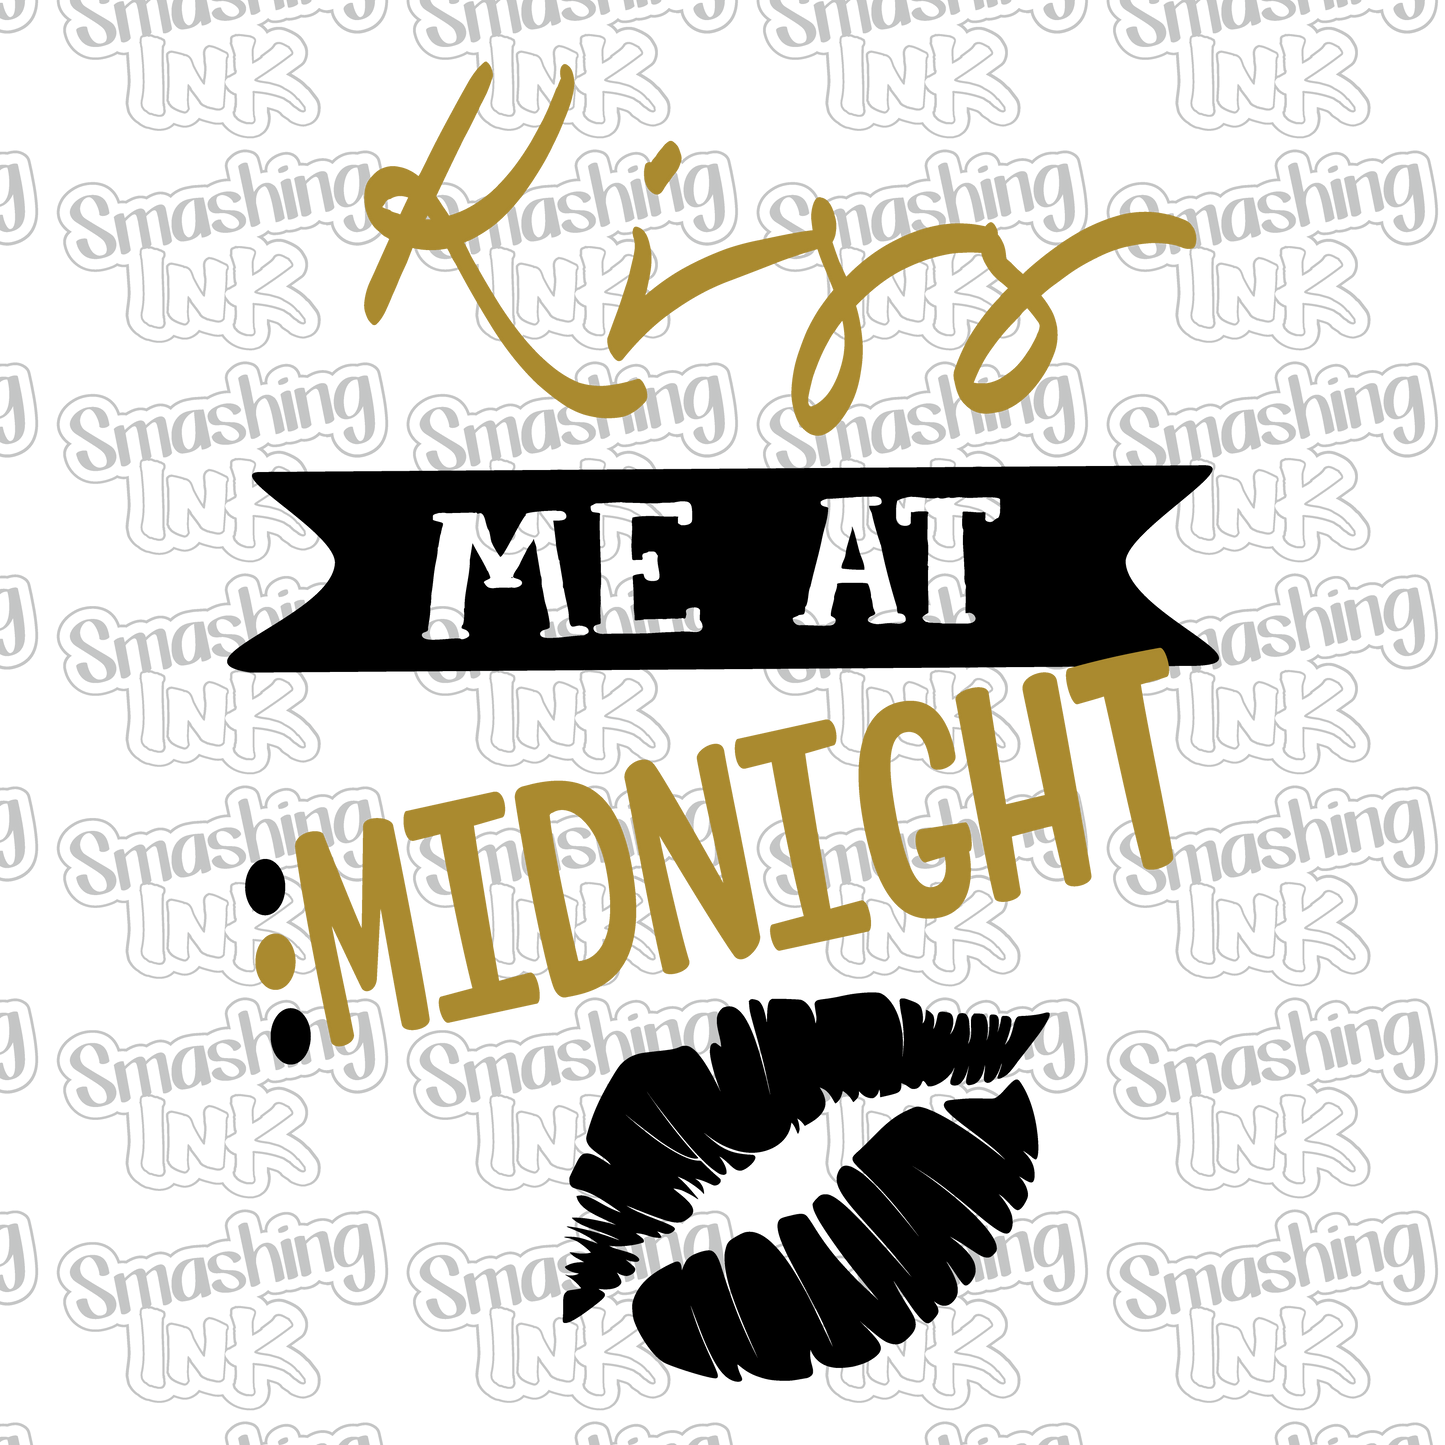 Kiss Me at Midnight- Heat Transfer | DTF | Sublimation (TAT 3 BUS DAYS) [4L-2HTV]